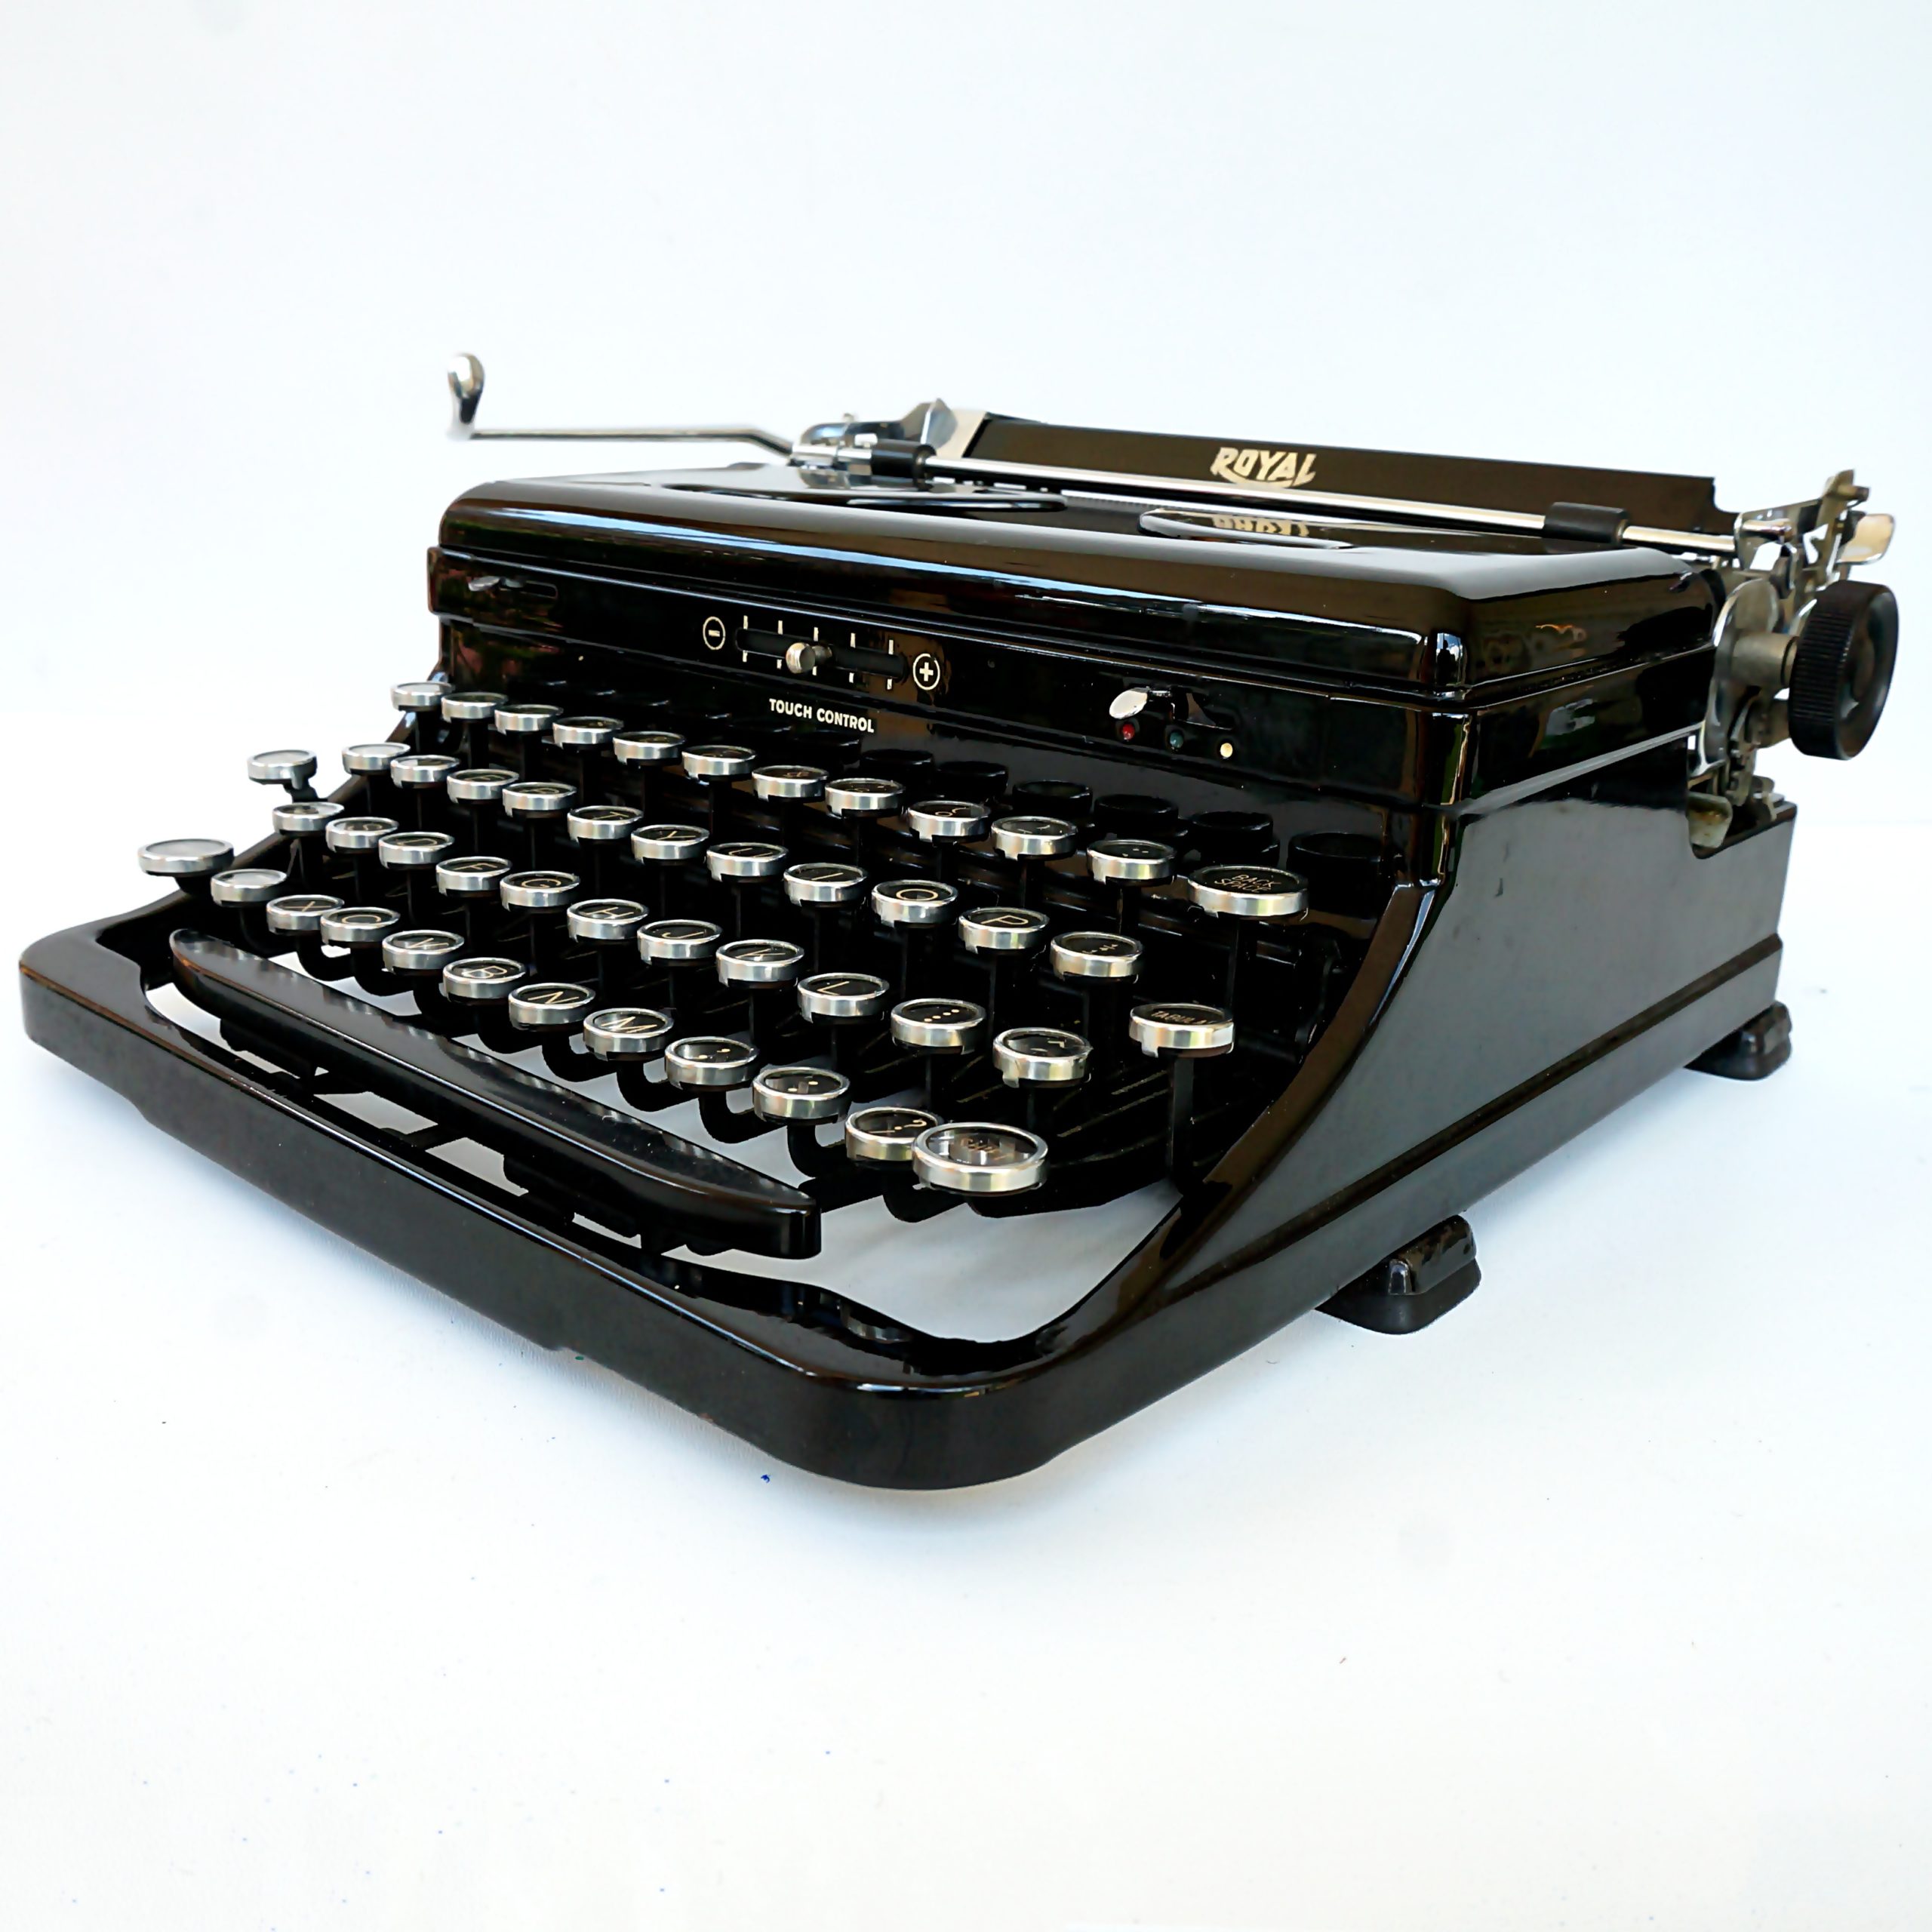 Royal Arrow Typewriter For Sale - My Cup Of Retro Typewriter Shop